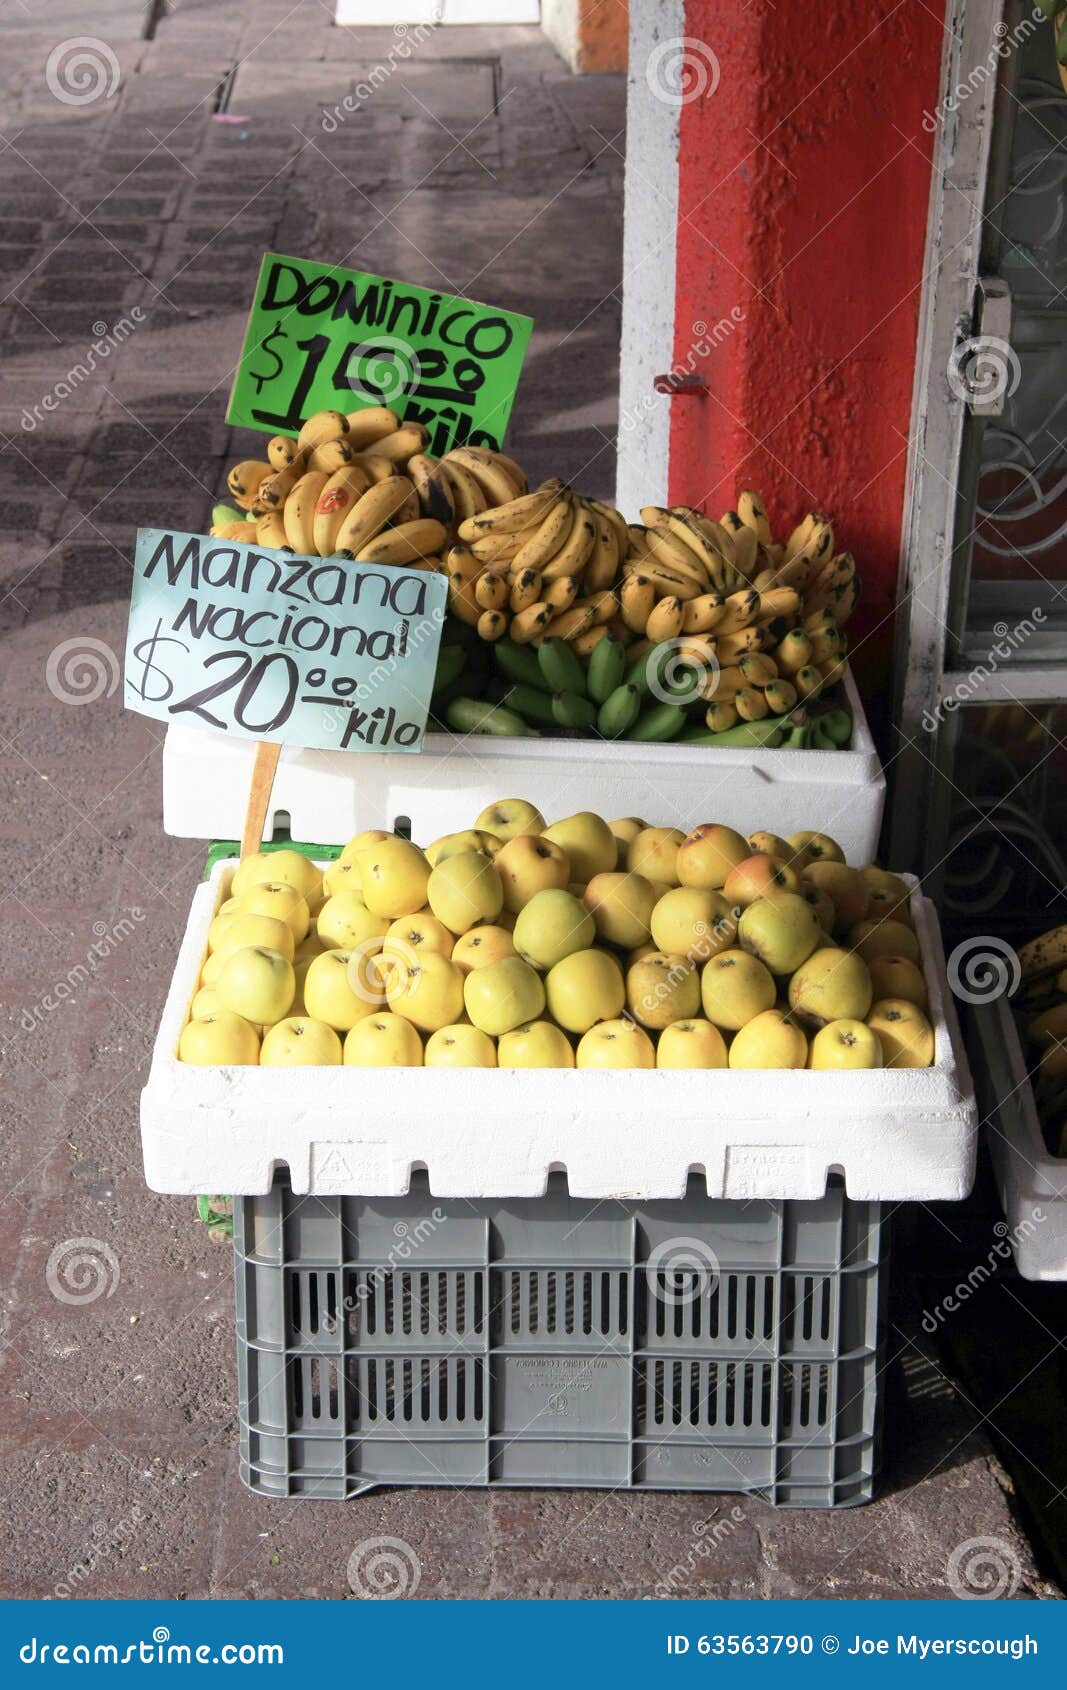 apples [manzana] & bananas [dominico] in crates outside shop